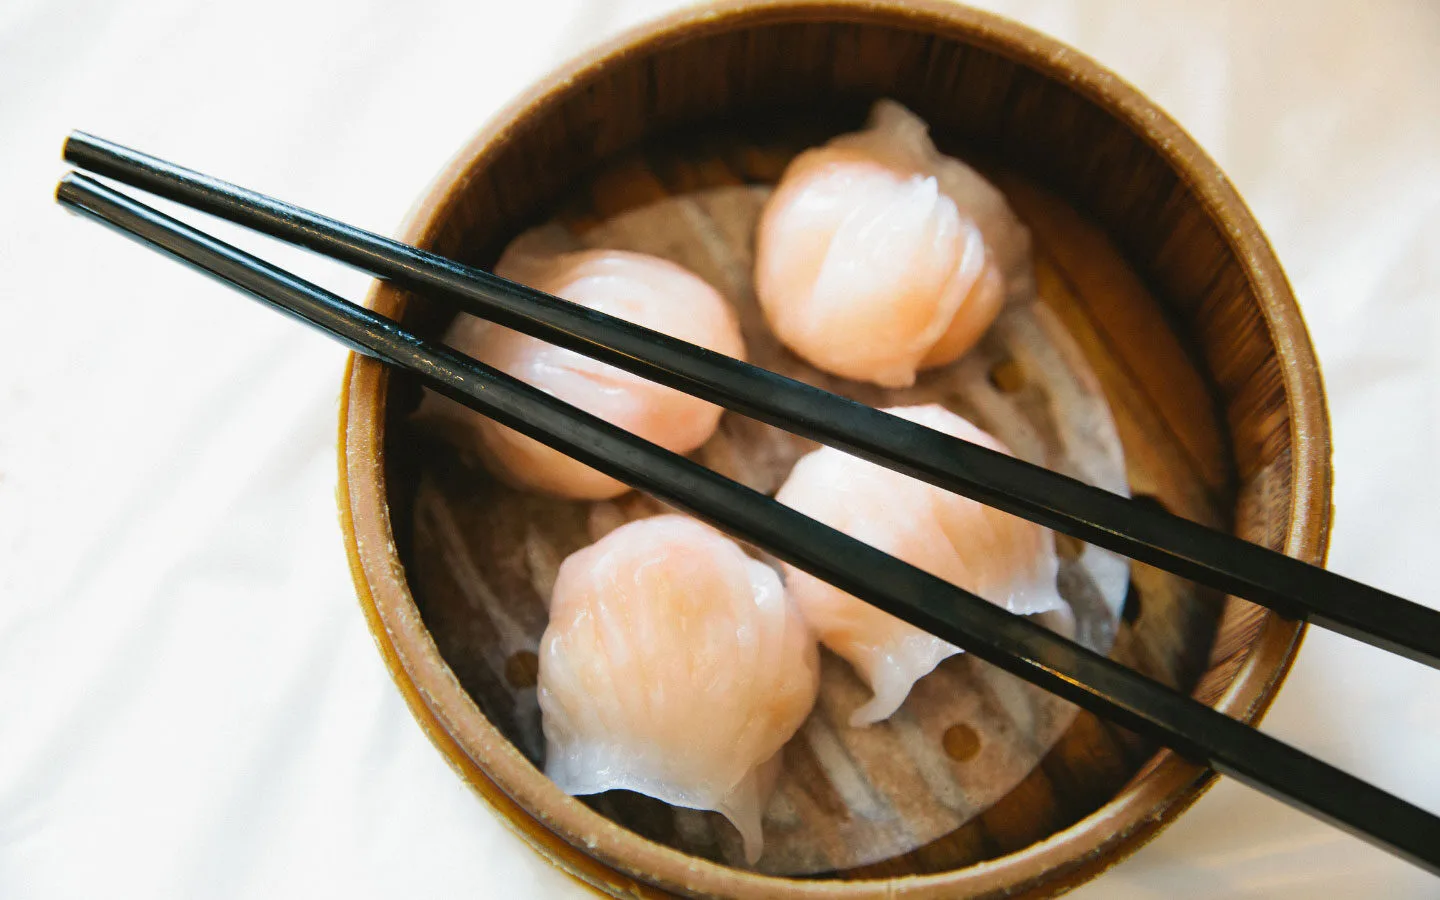 Chinese dim sum dumplings in London's Soho